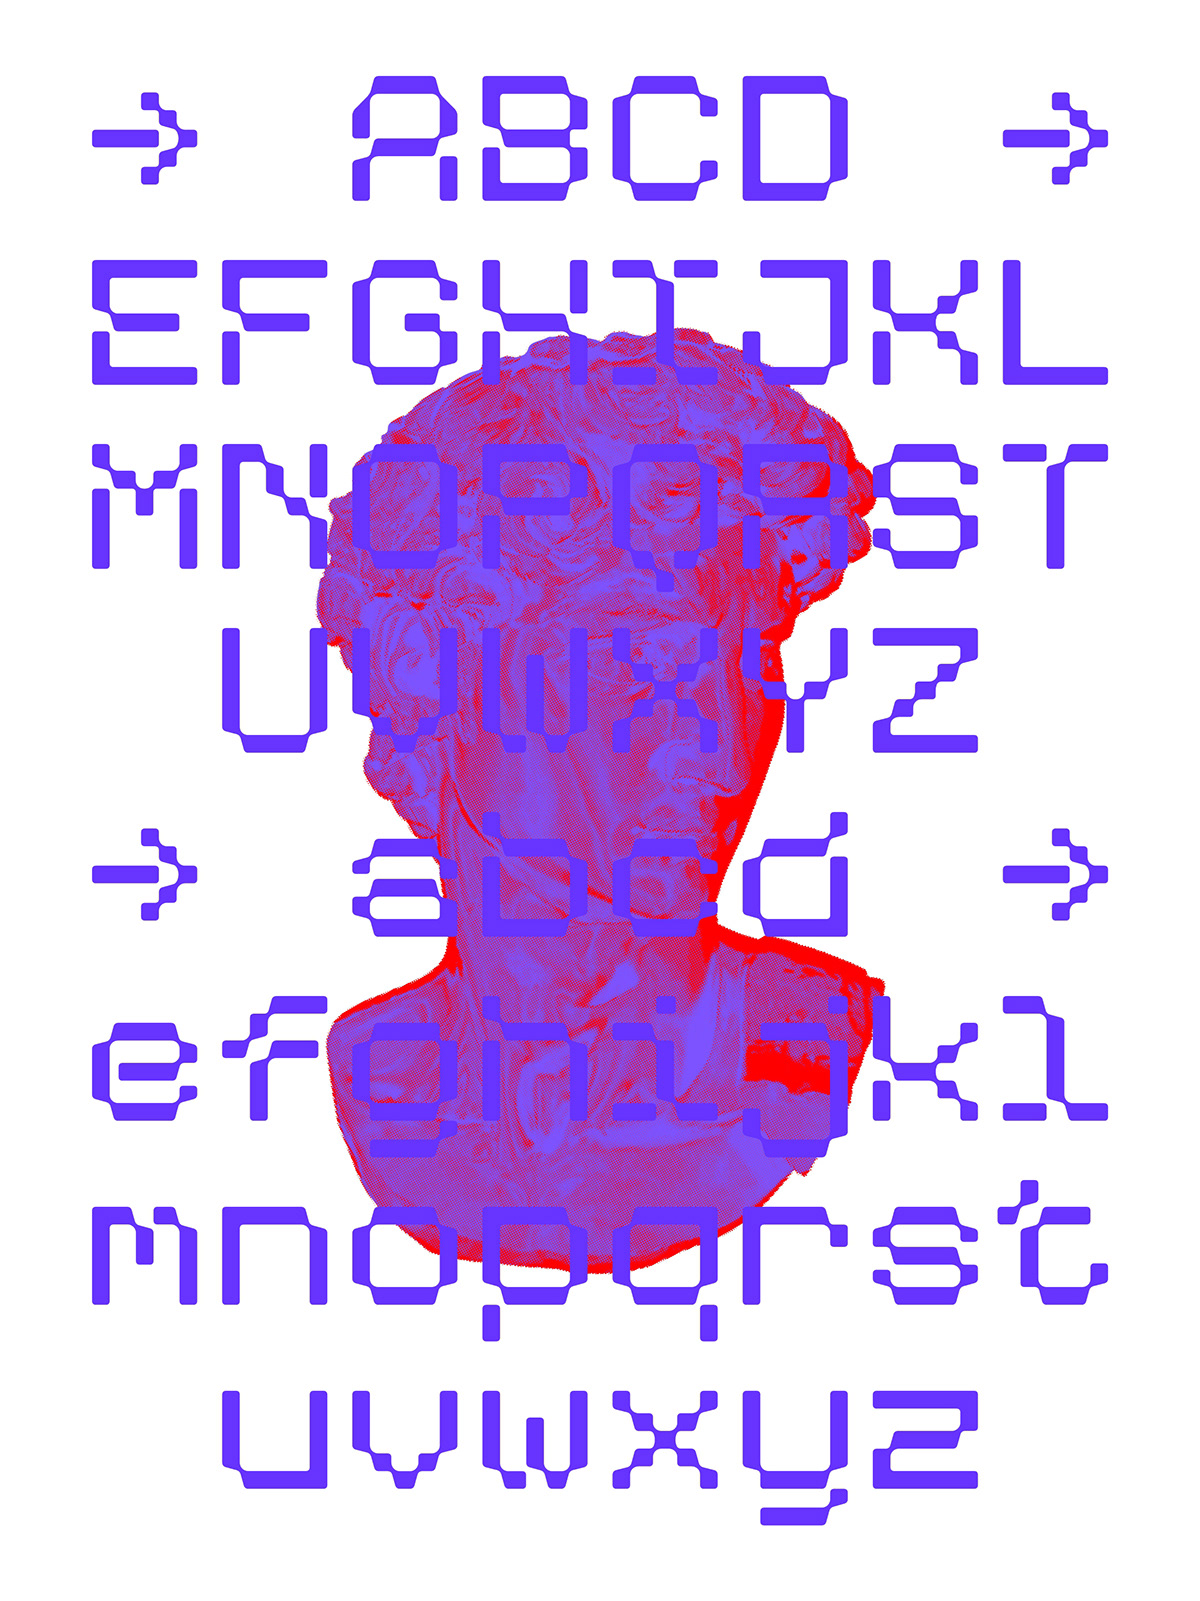 atk studio display font monospaced radinal riki tech font techno Tipos Tiposka tiposka font tiposka typeface